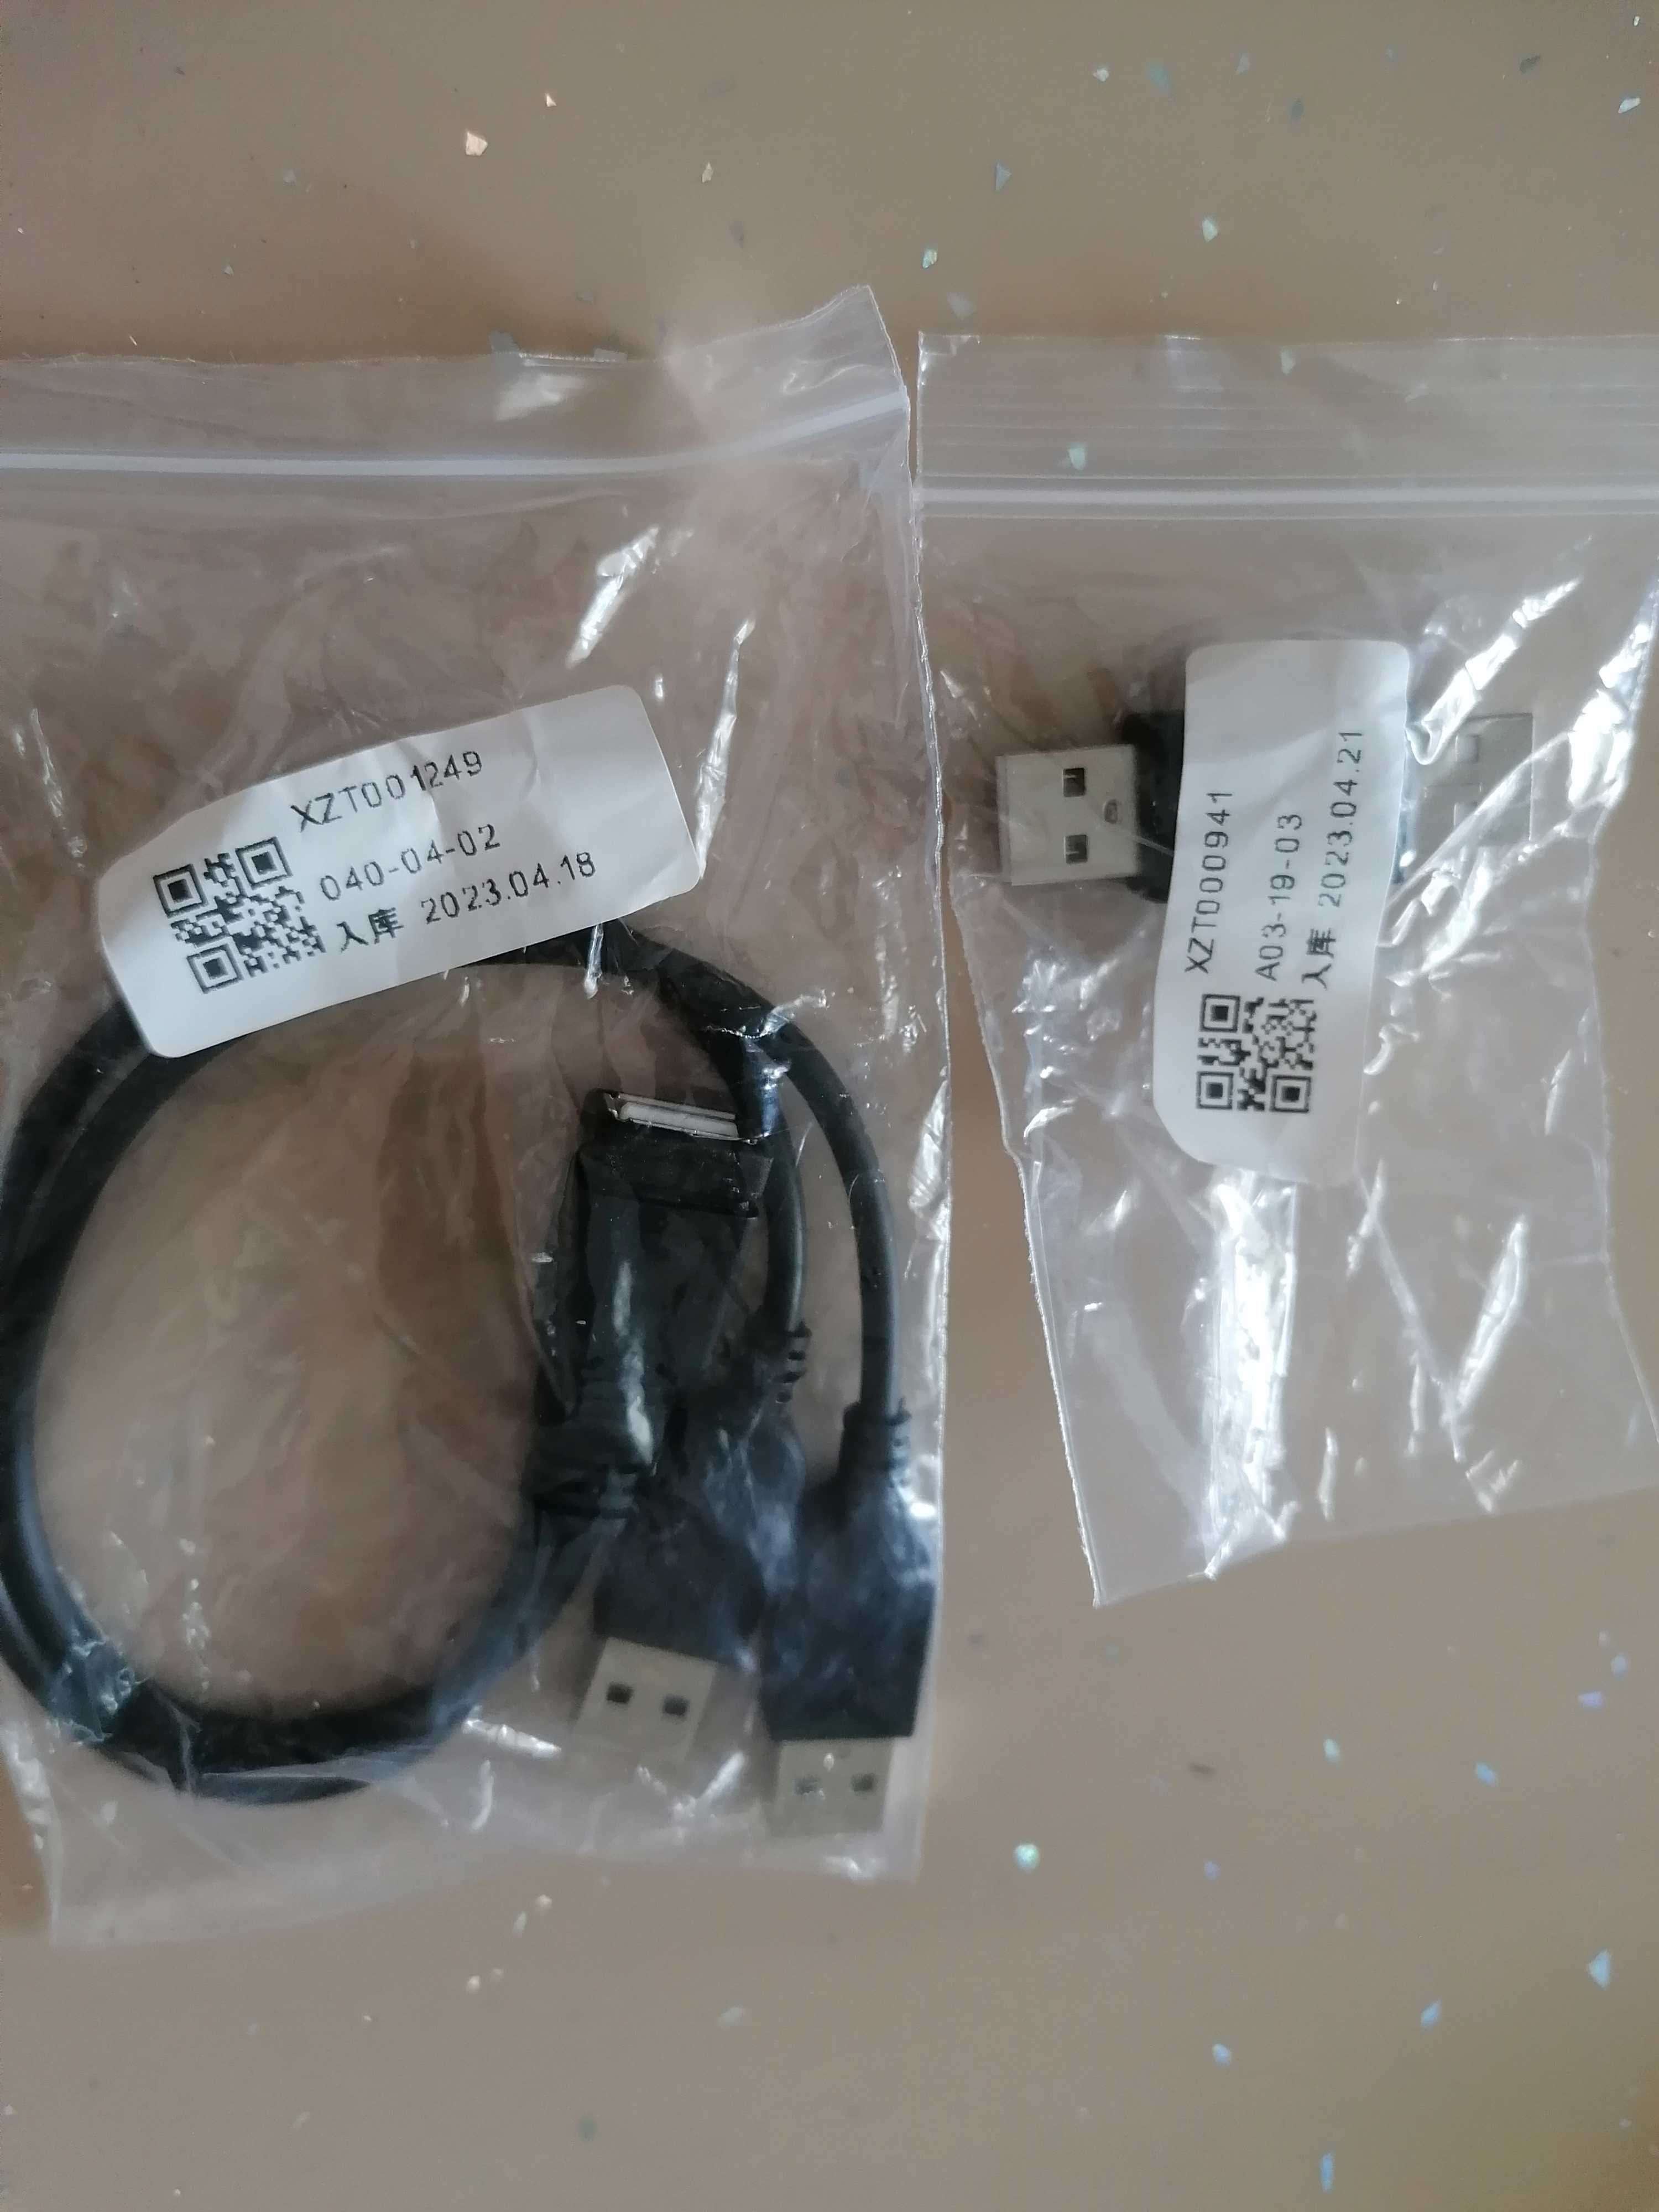 Vând adaptor USB și cablu dublu Usb noi